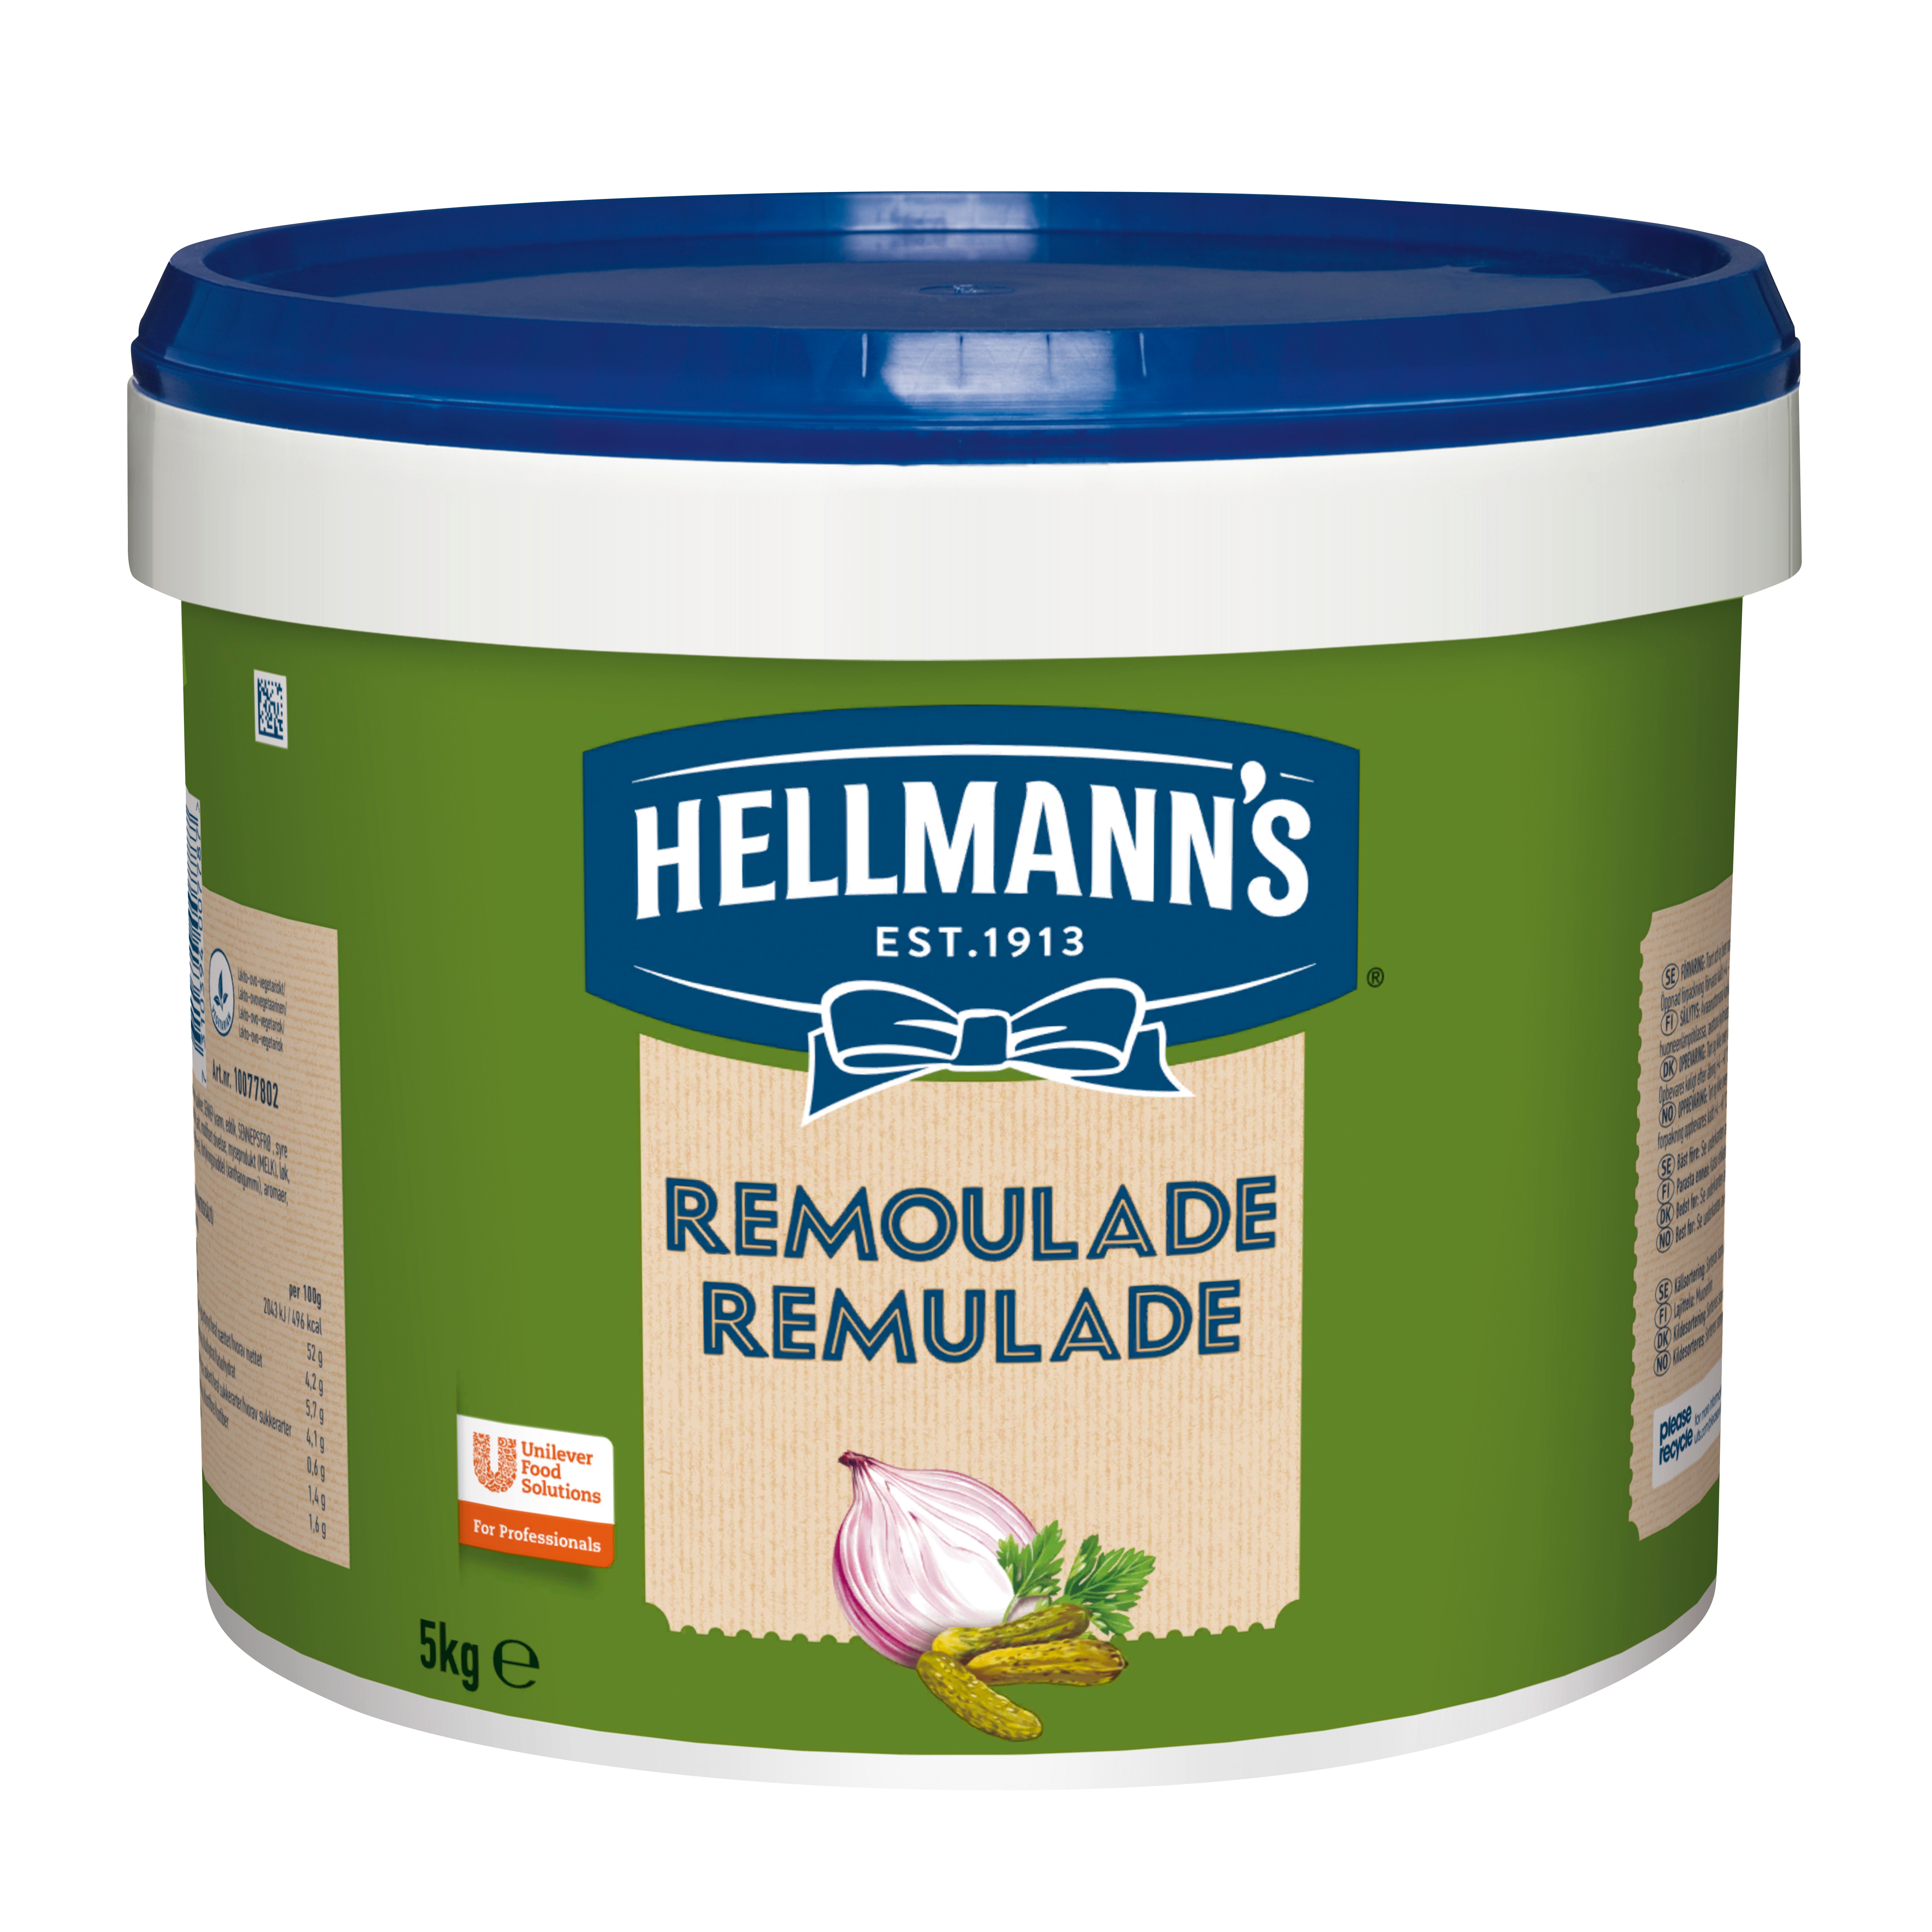 Hellmann's Remouladekastike 5 kg - 